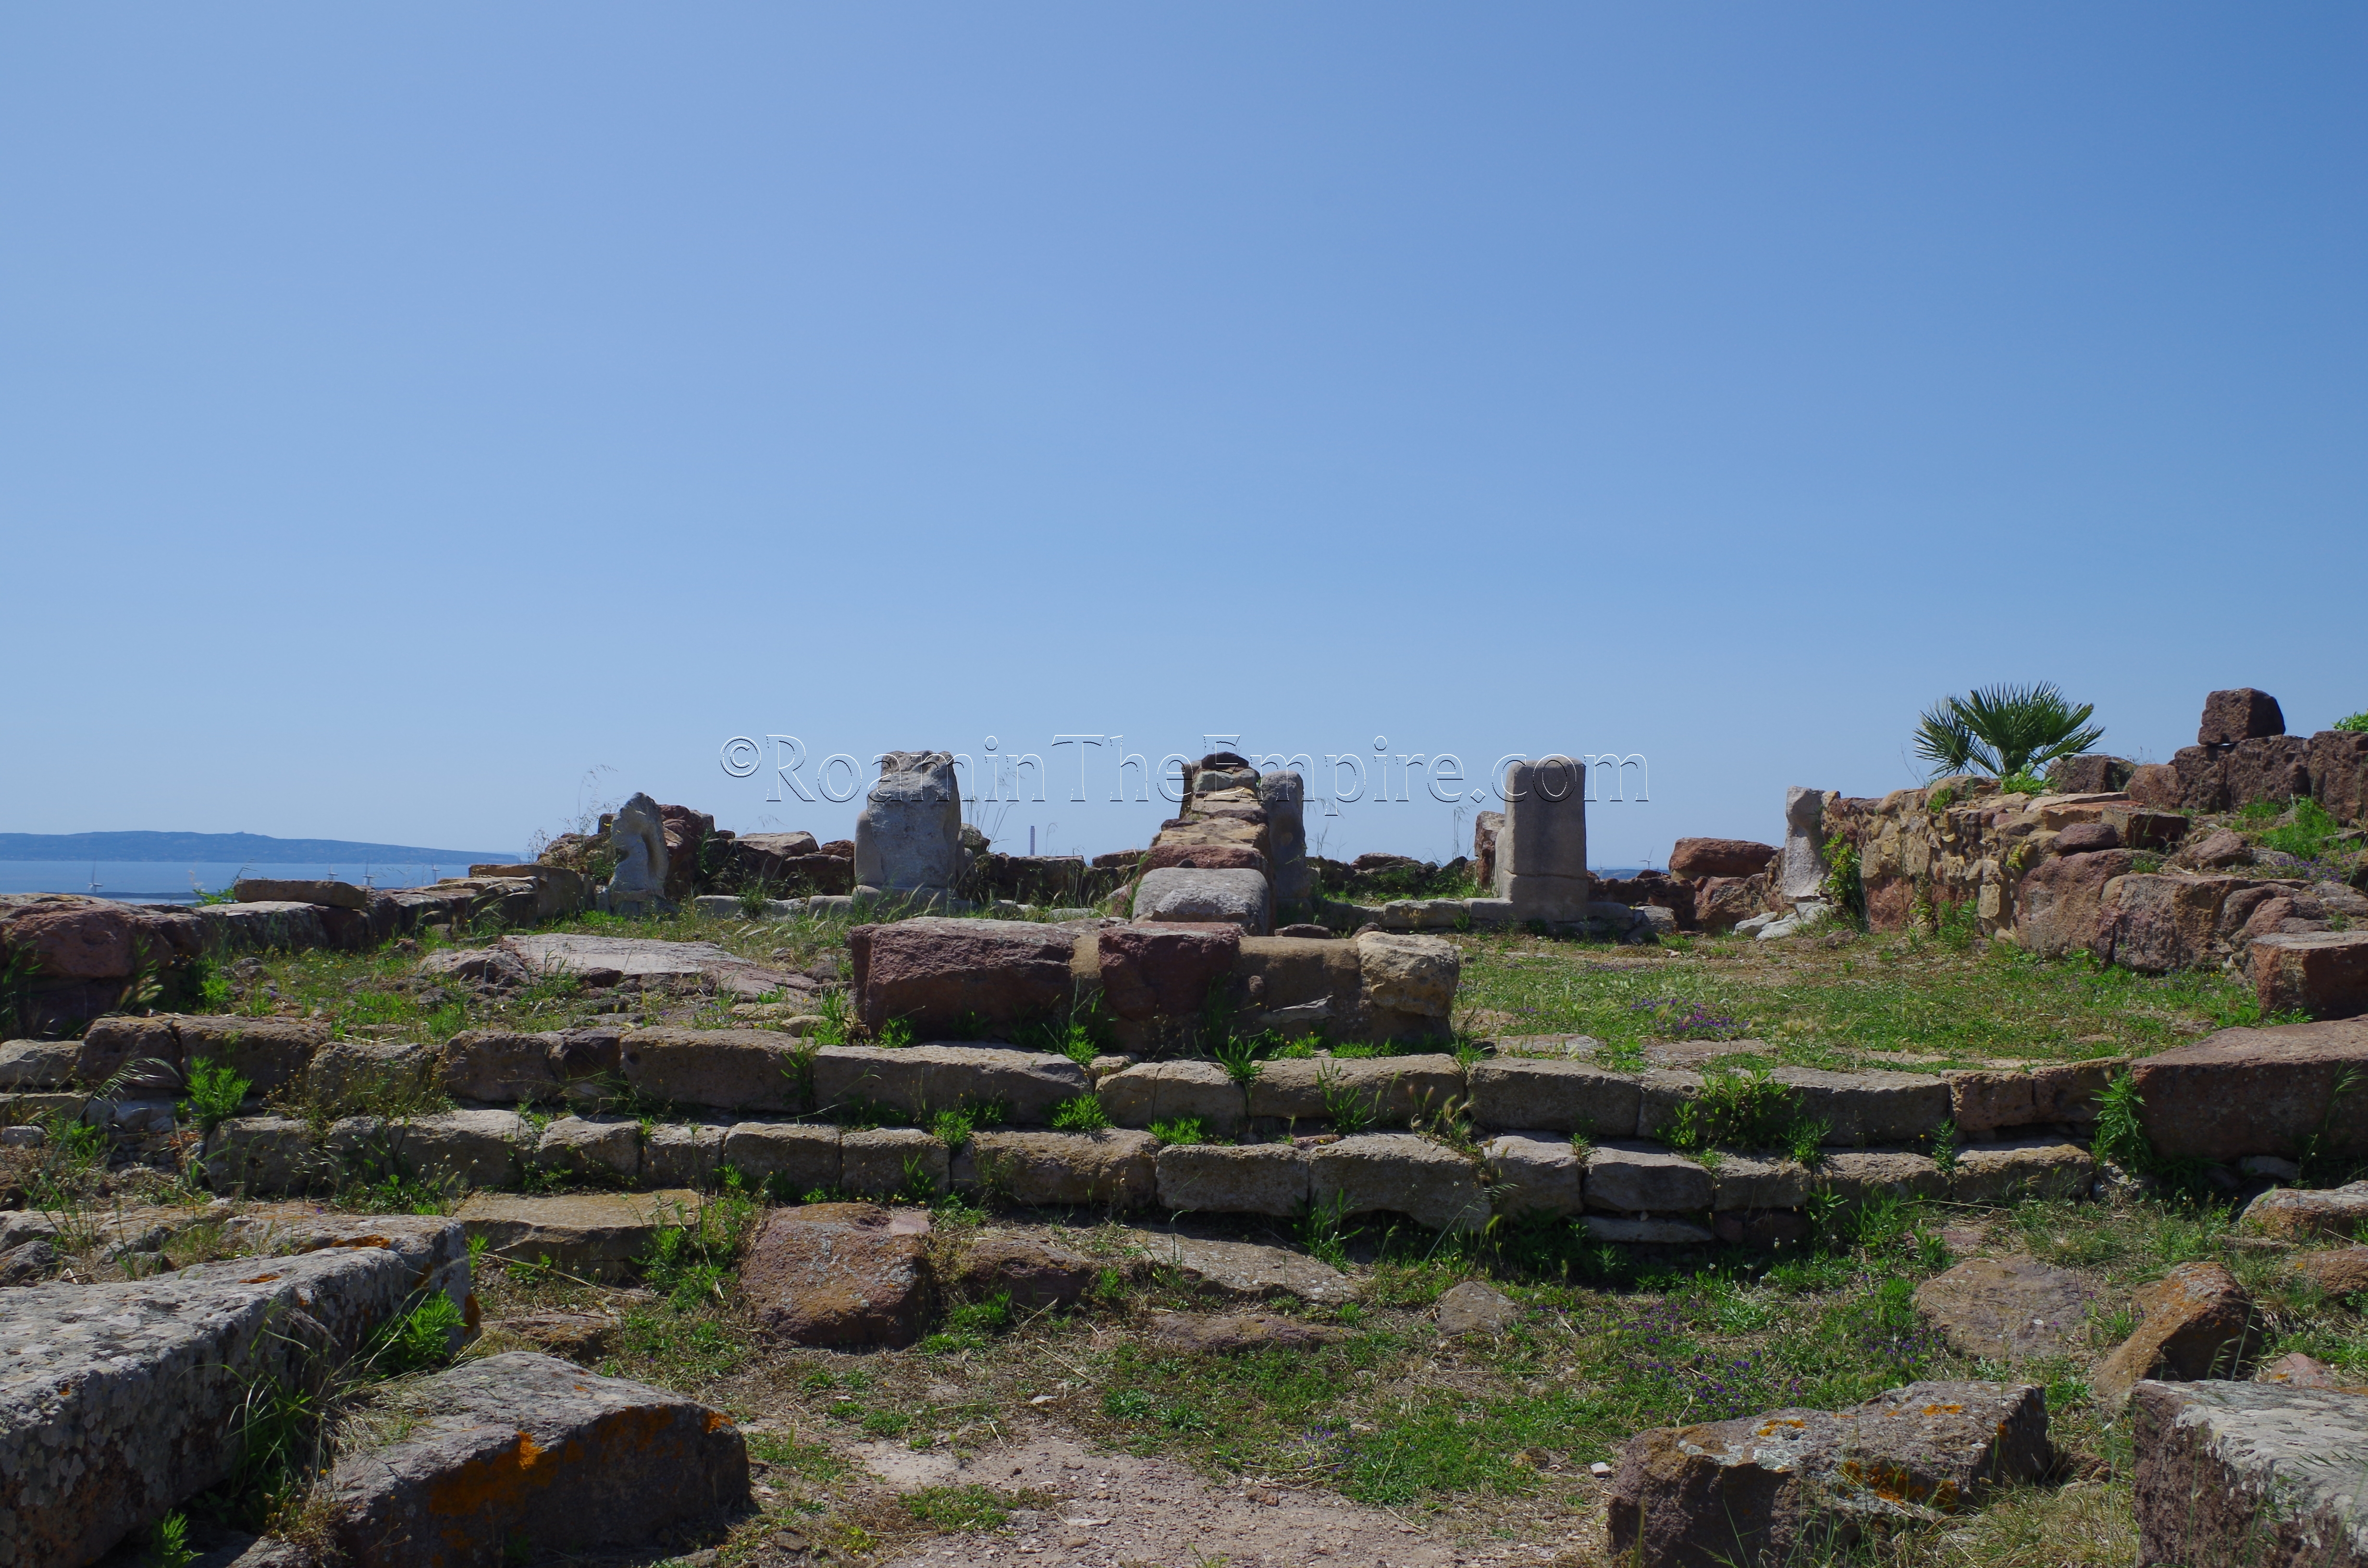 Temple of Astarte at Monte Sirai.